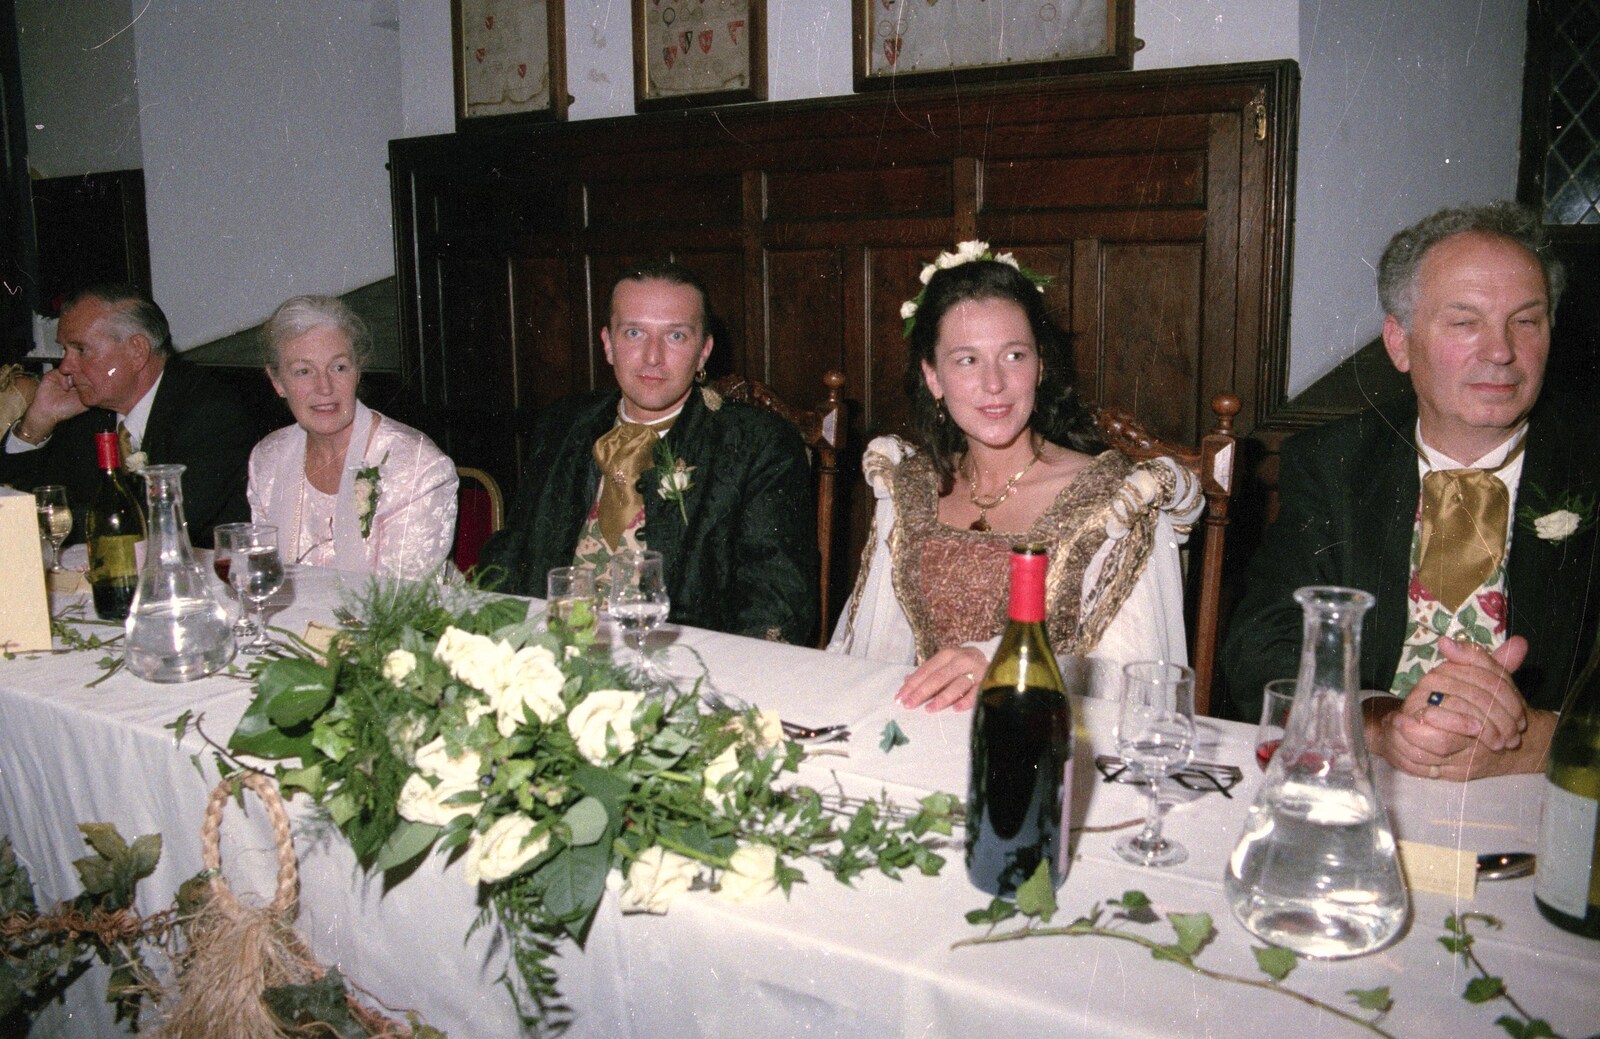 Stuart and Sarah's CISU Wedding, Naworth Castle, Brampton, Cumbria - 21st September 1996: Stuart and the Top Table